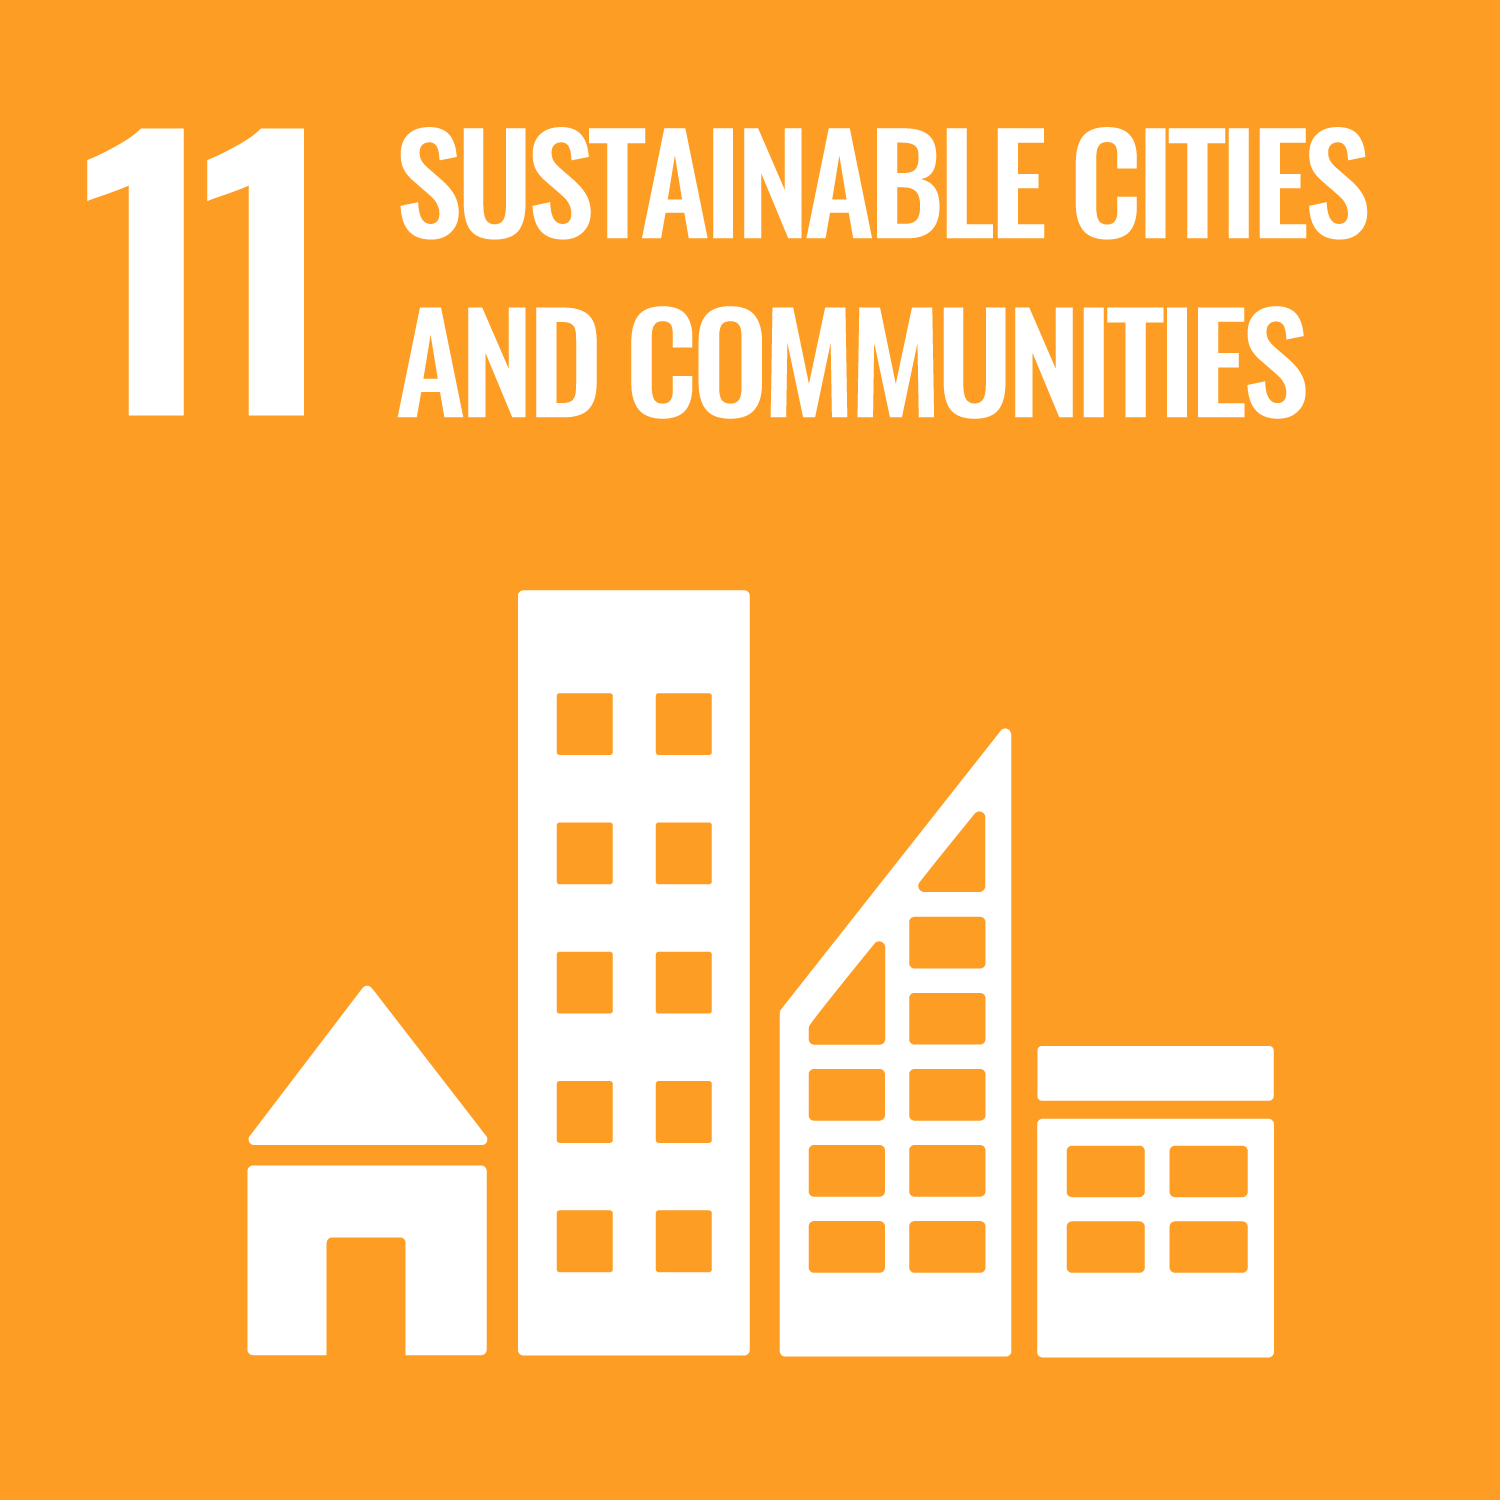 Sustainable Development Goal: SDG 11 "Sustainable cities and communities"